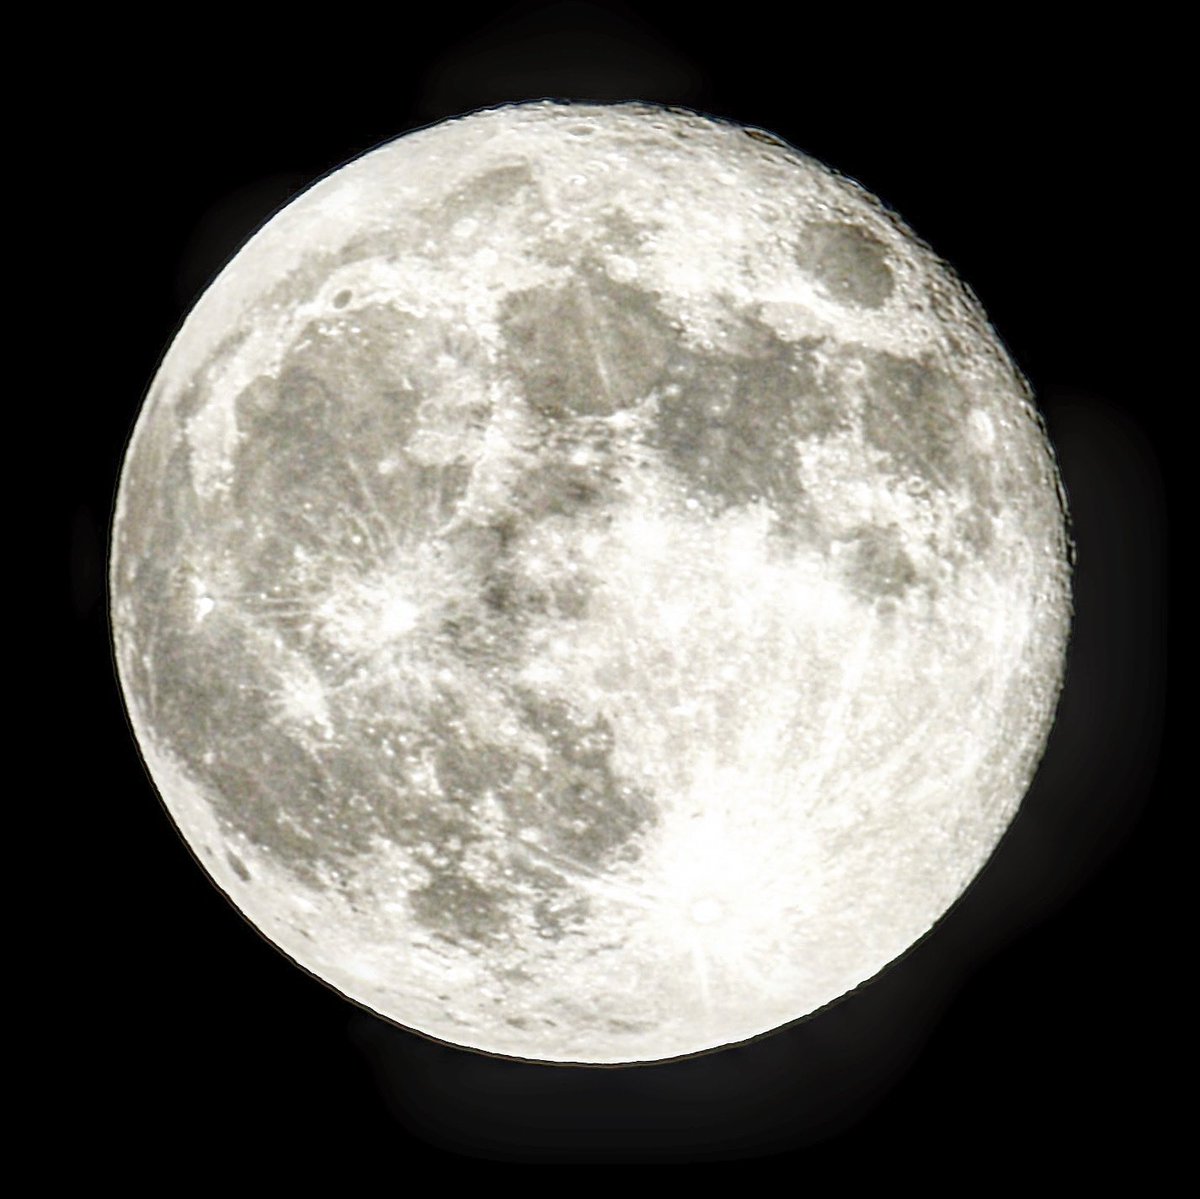 Shooting for the moon #nikon #photography #d800 #sigma600mm #moonphotography #adayinthelifeofarealtor